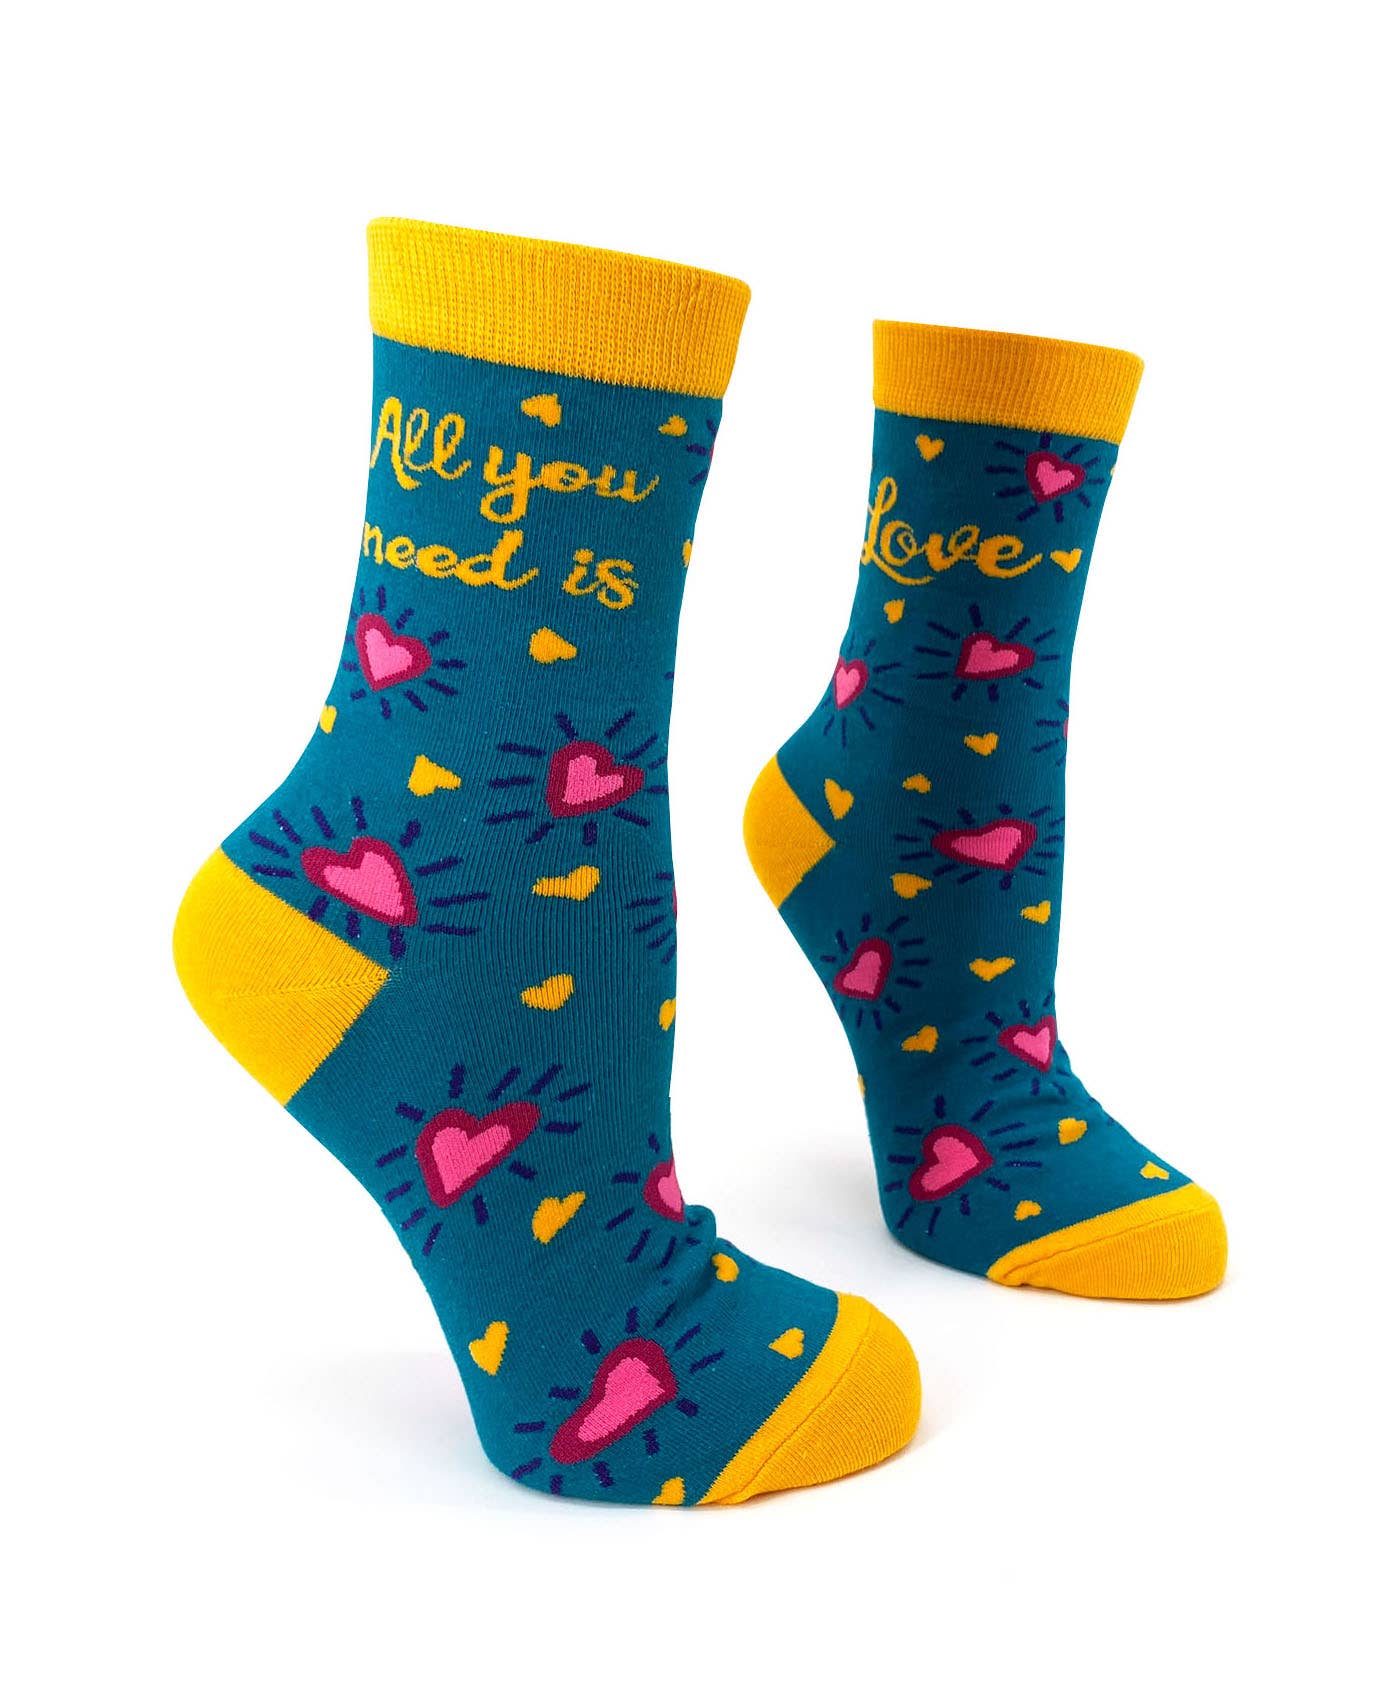 All You Need Is Love Women's Crew Socks